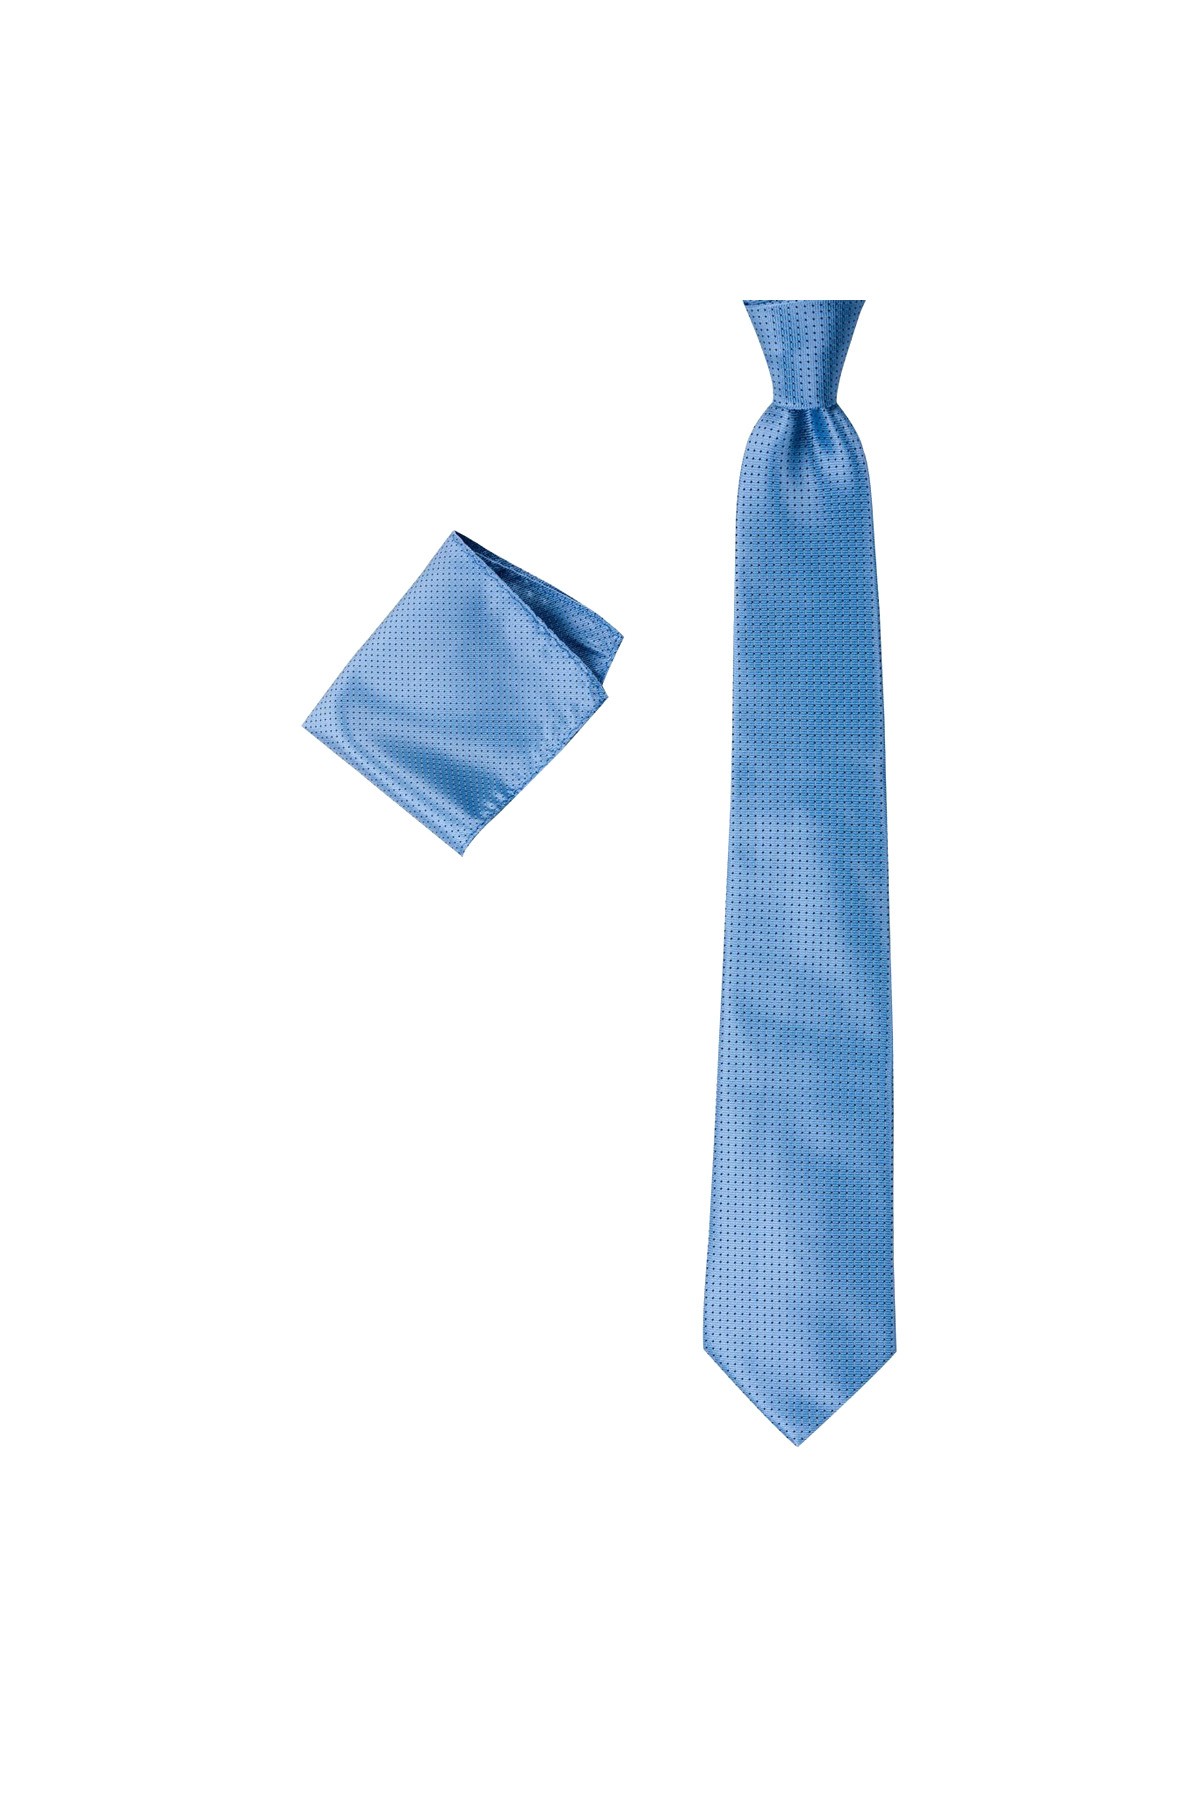 Klasik 8 cm genişliğinde mendilli kravat